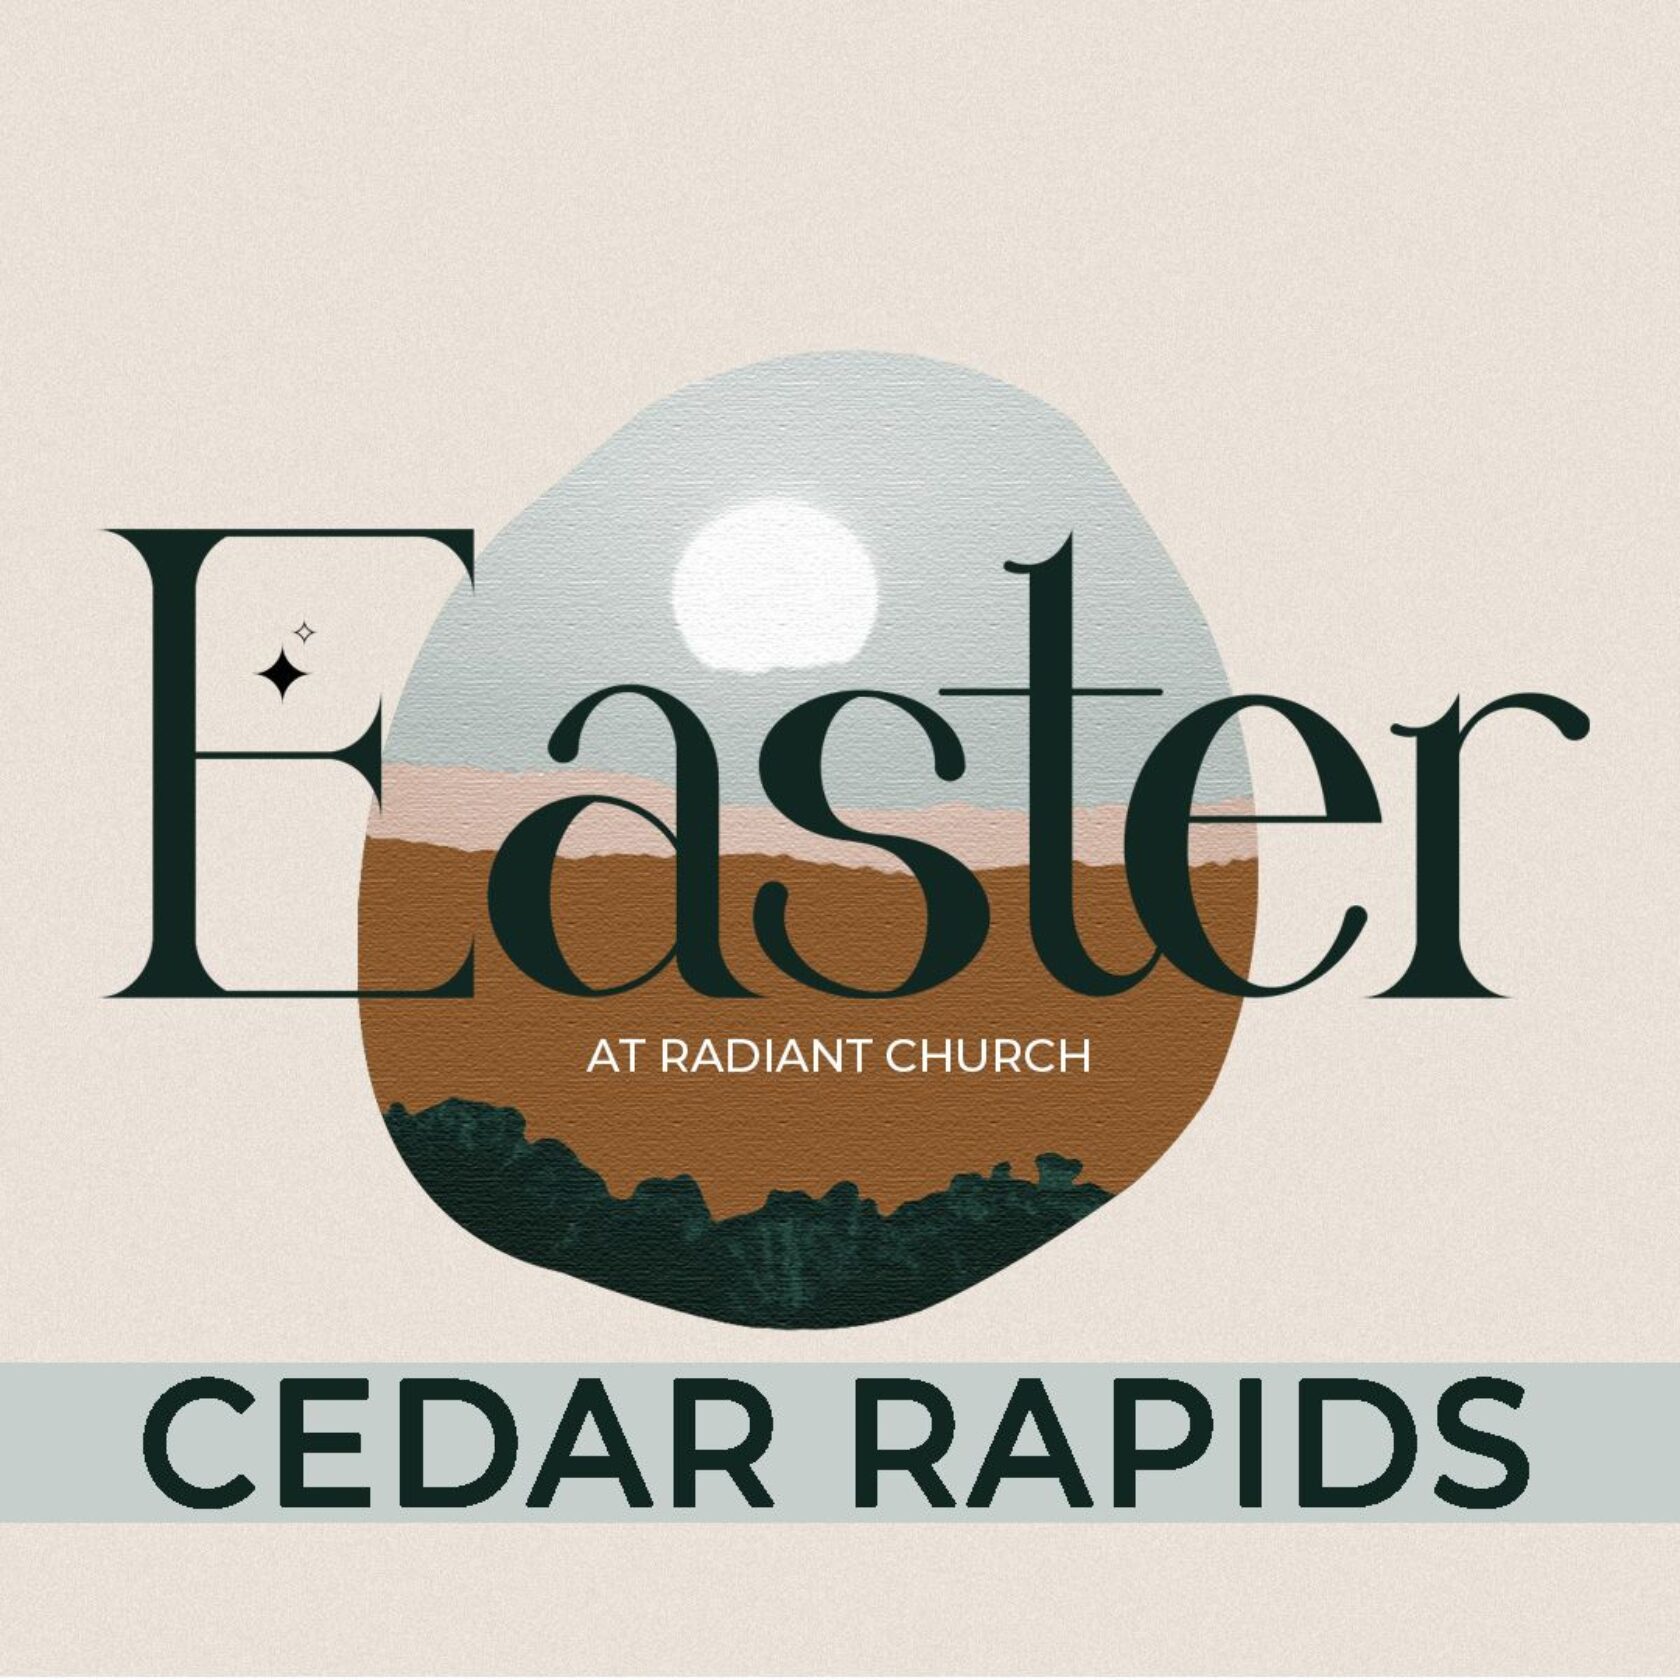 Easter at Radiant Church | CEDAR RAPIDS